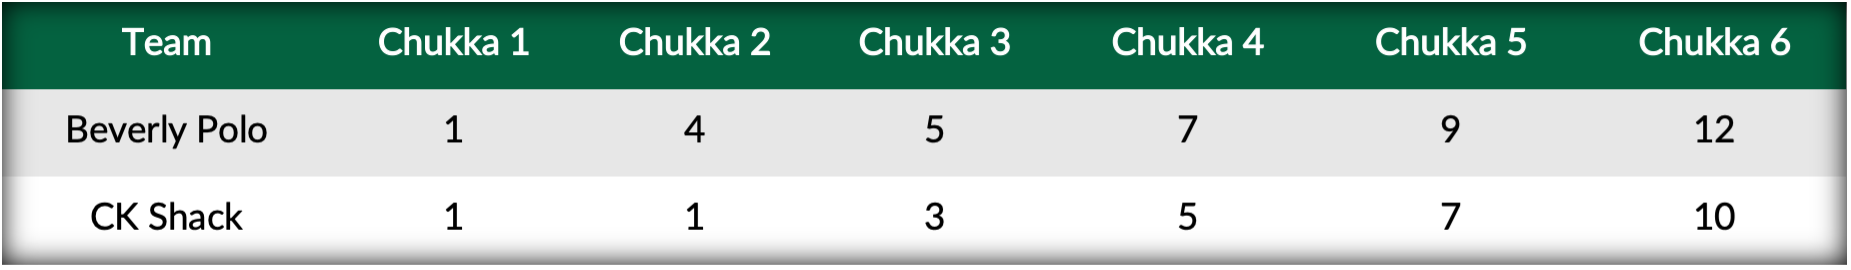 Beverly Polo vs CK Shack- Score Table